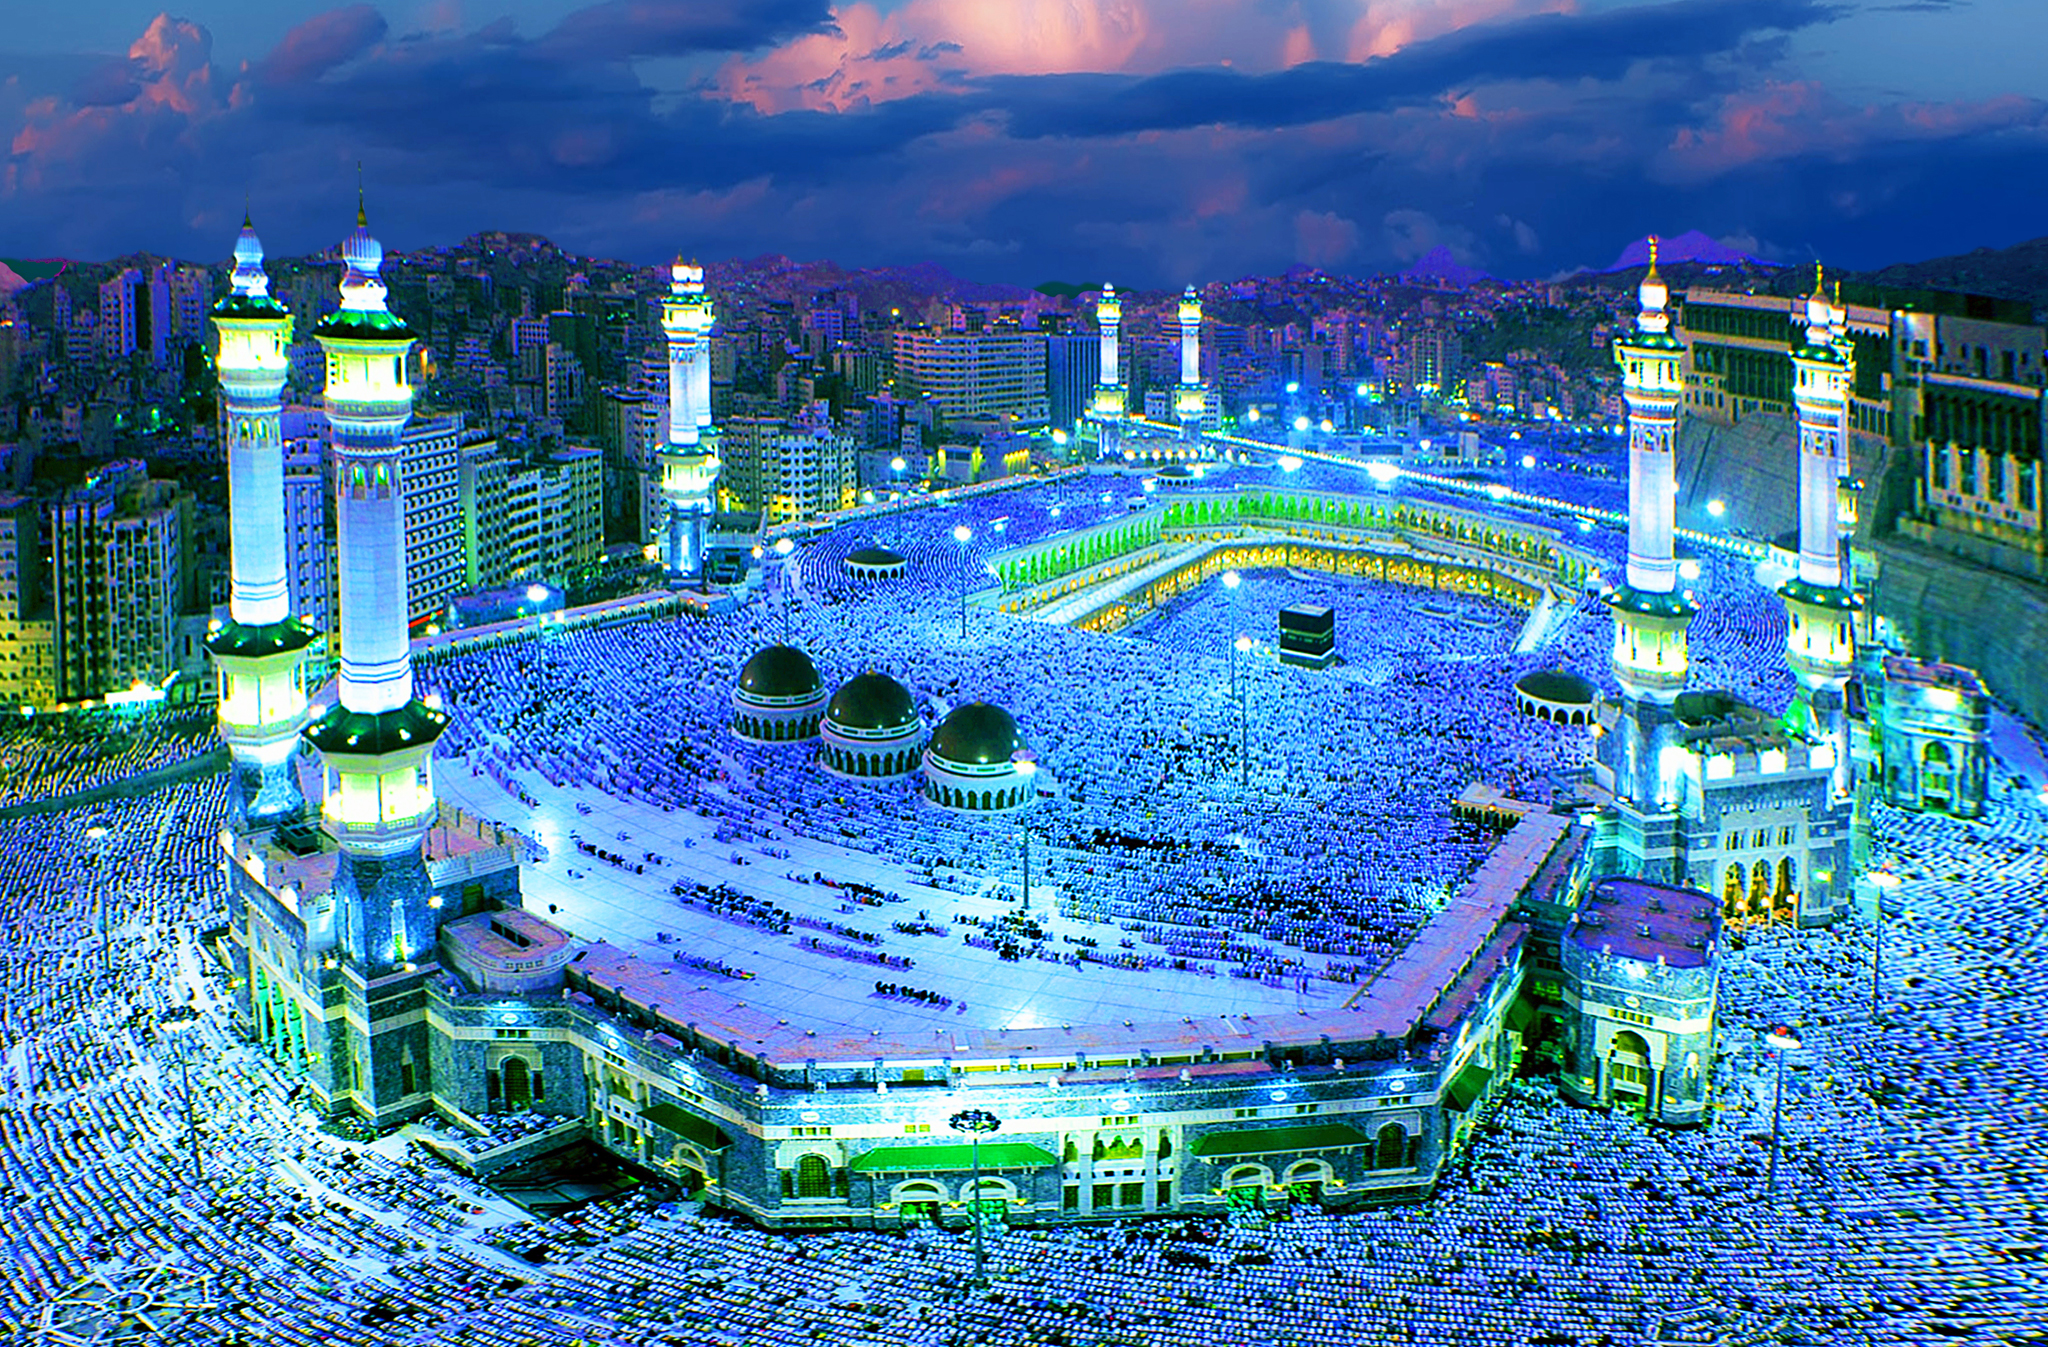 Umrah Ziyarat Places in Makkah and Madinah You Must Visit